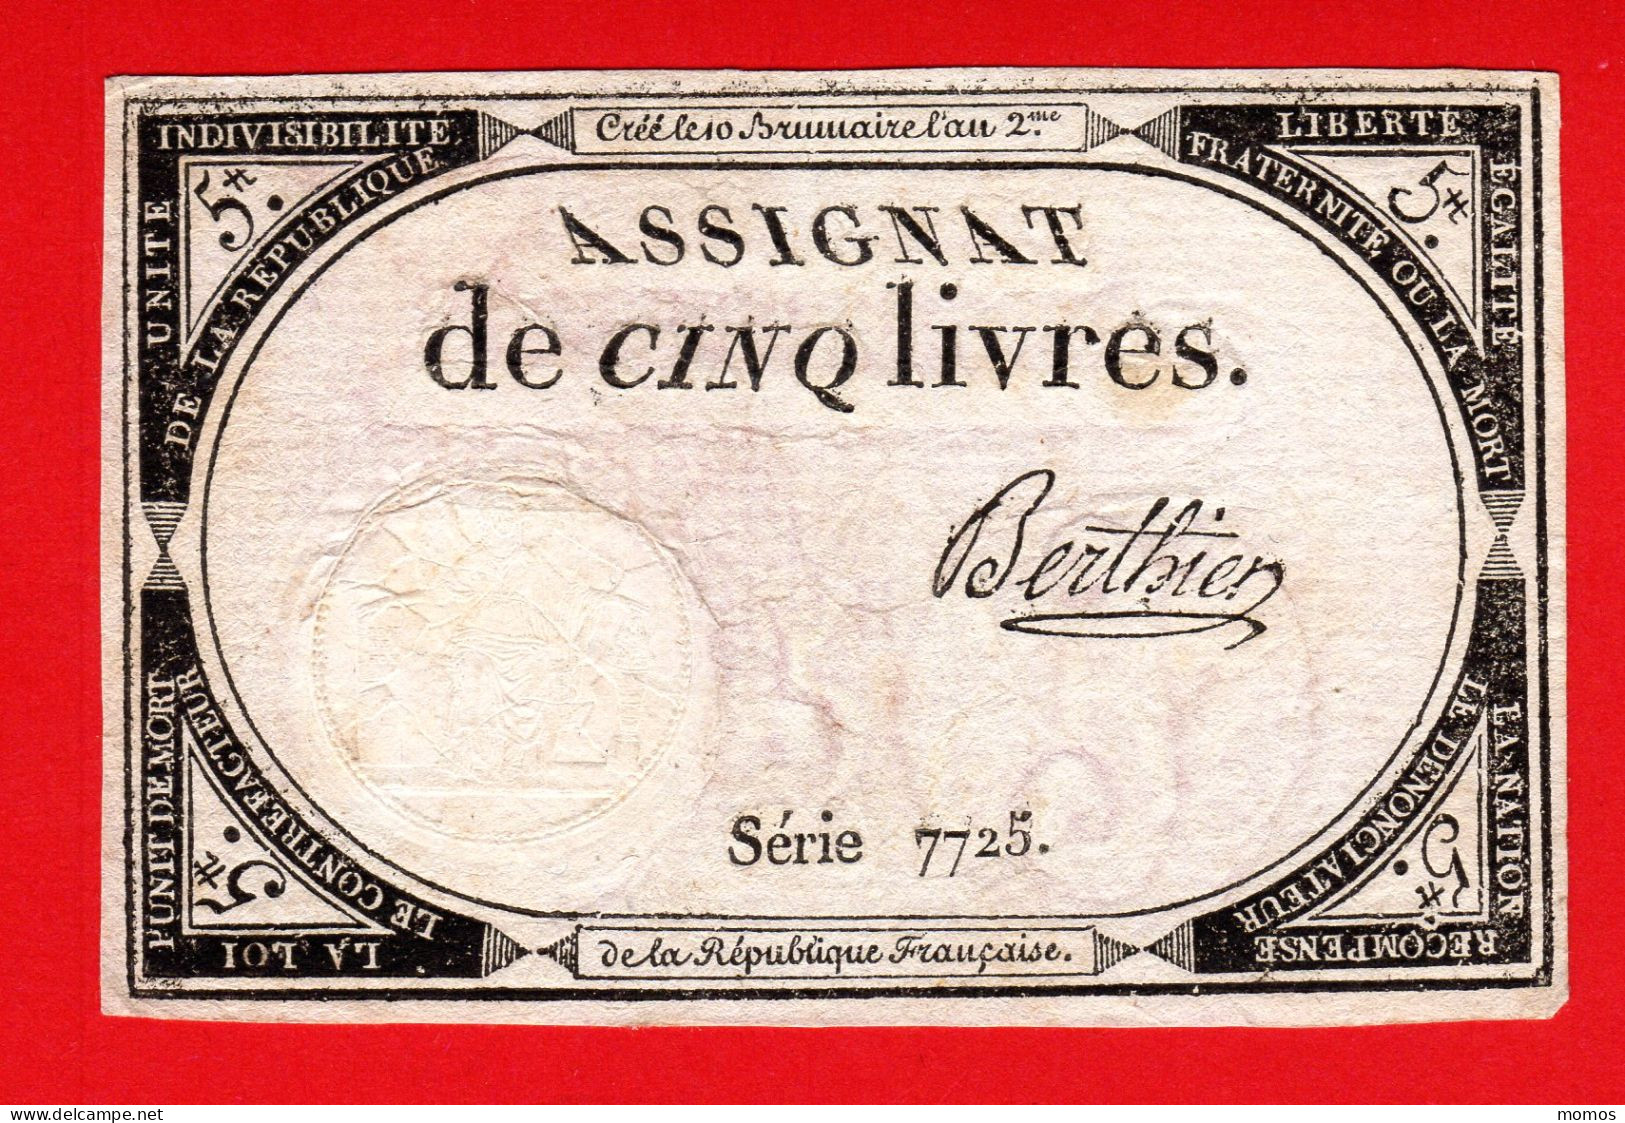 ASSIGNAT DE 5 LIVRES - 10 BRUMAIRE AN 2  (31 OCTOBRE 1793) - BERTHIER - REVOLUTION FRANCAISE - Assignats